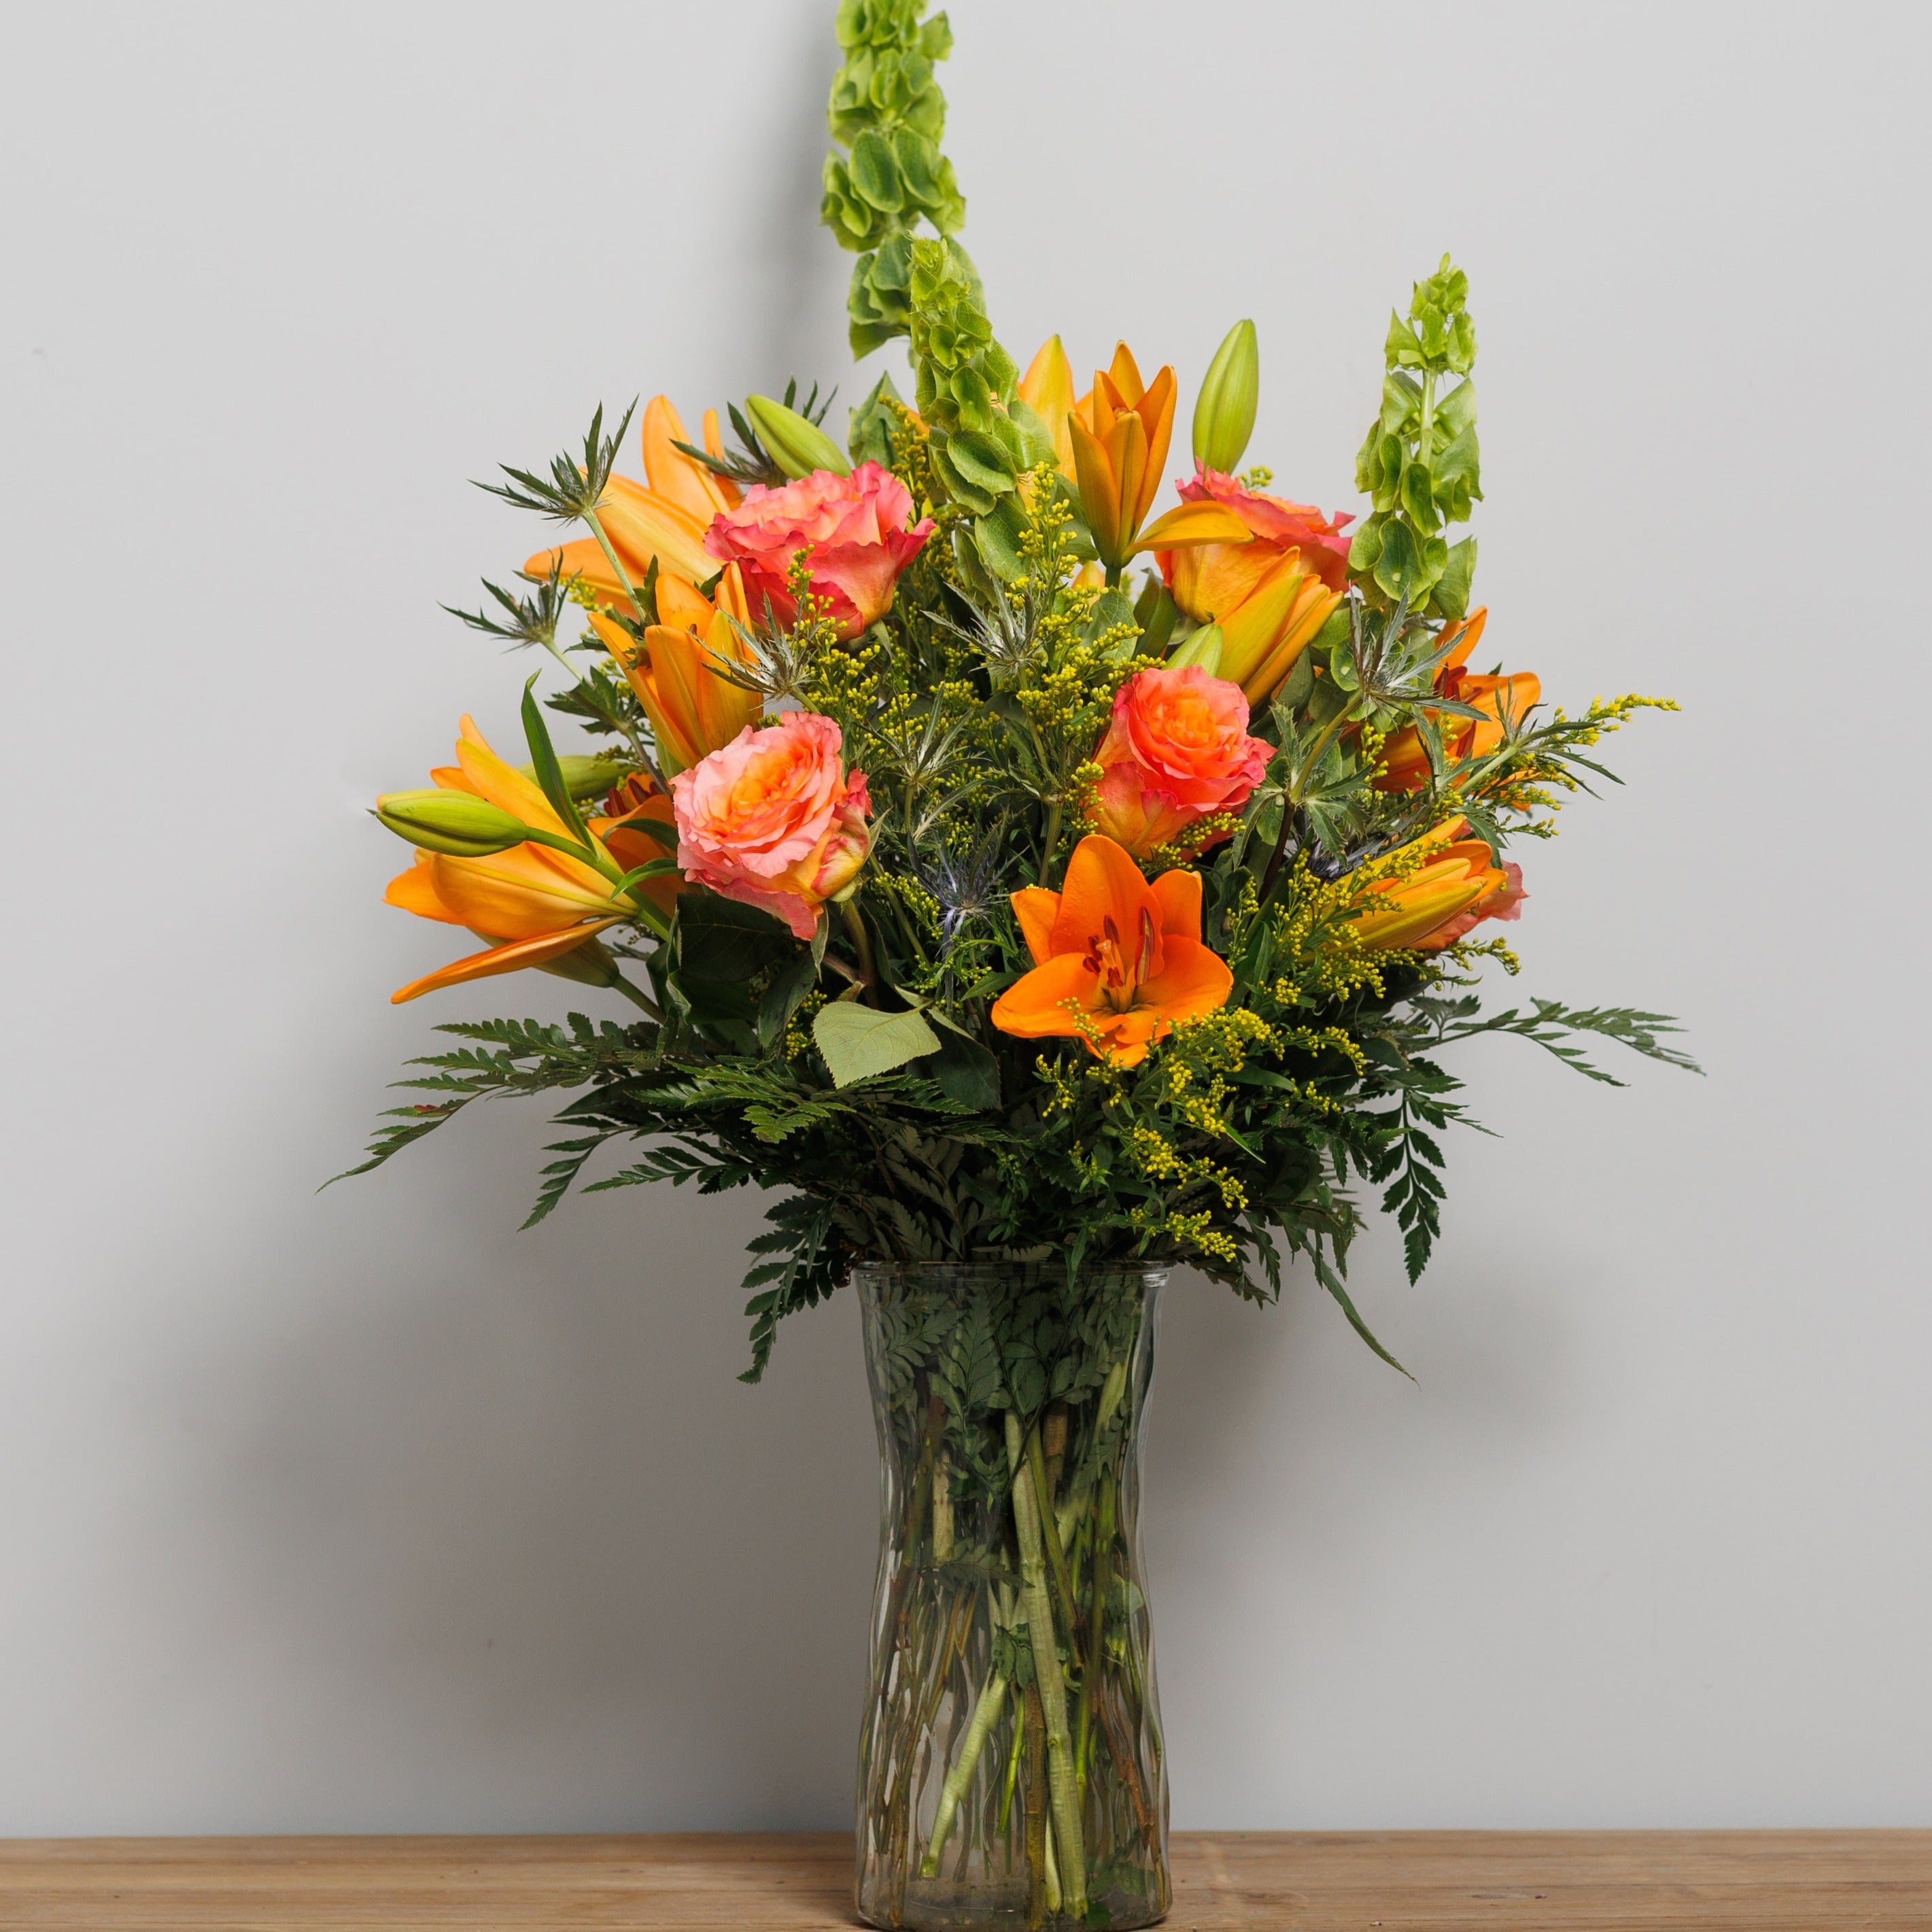 Orange lilies, free spirit roses and Bells of Ireland in a vase arrangement.